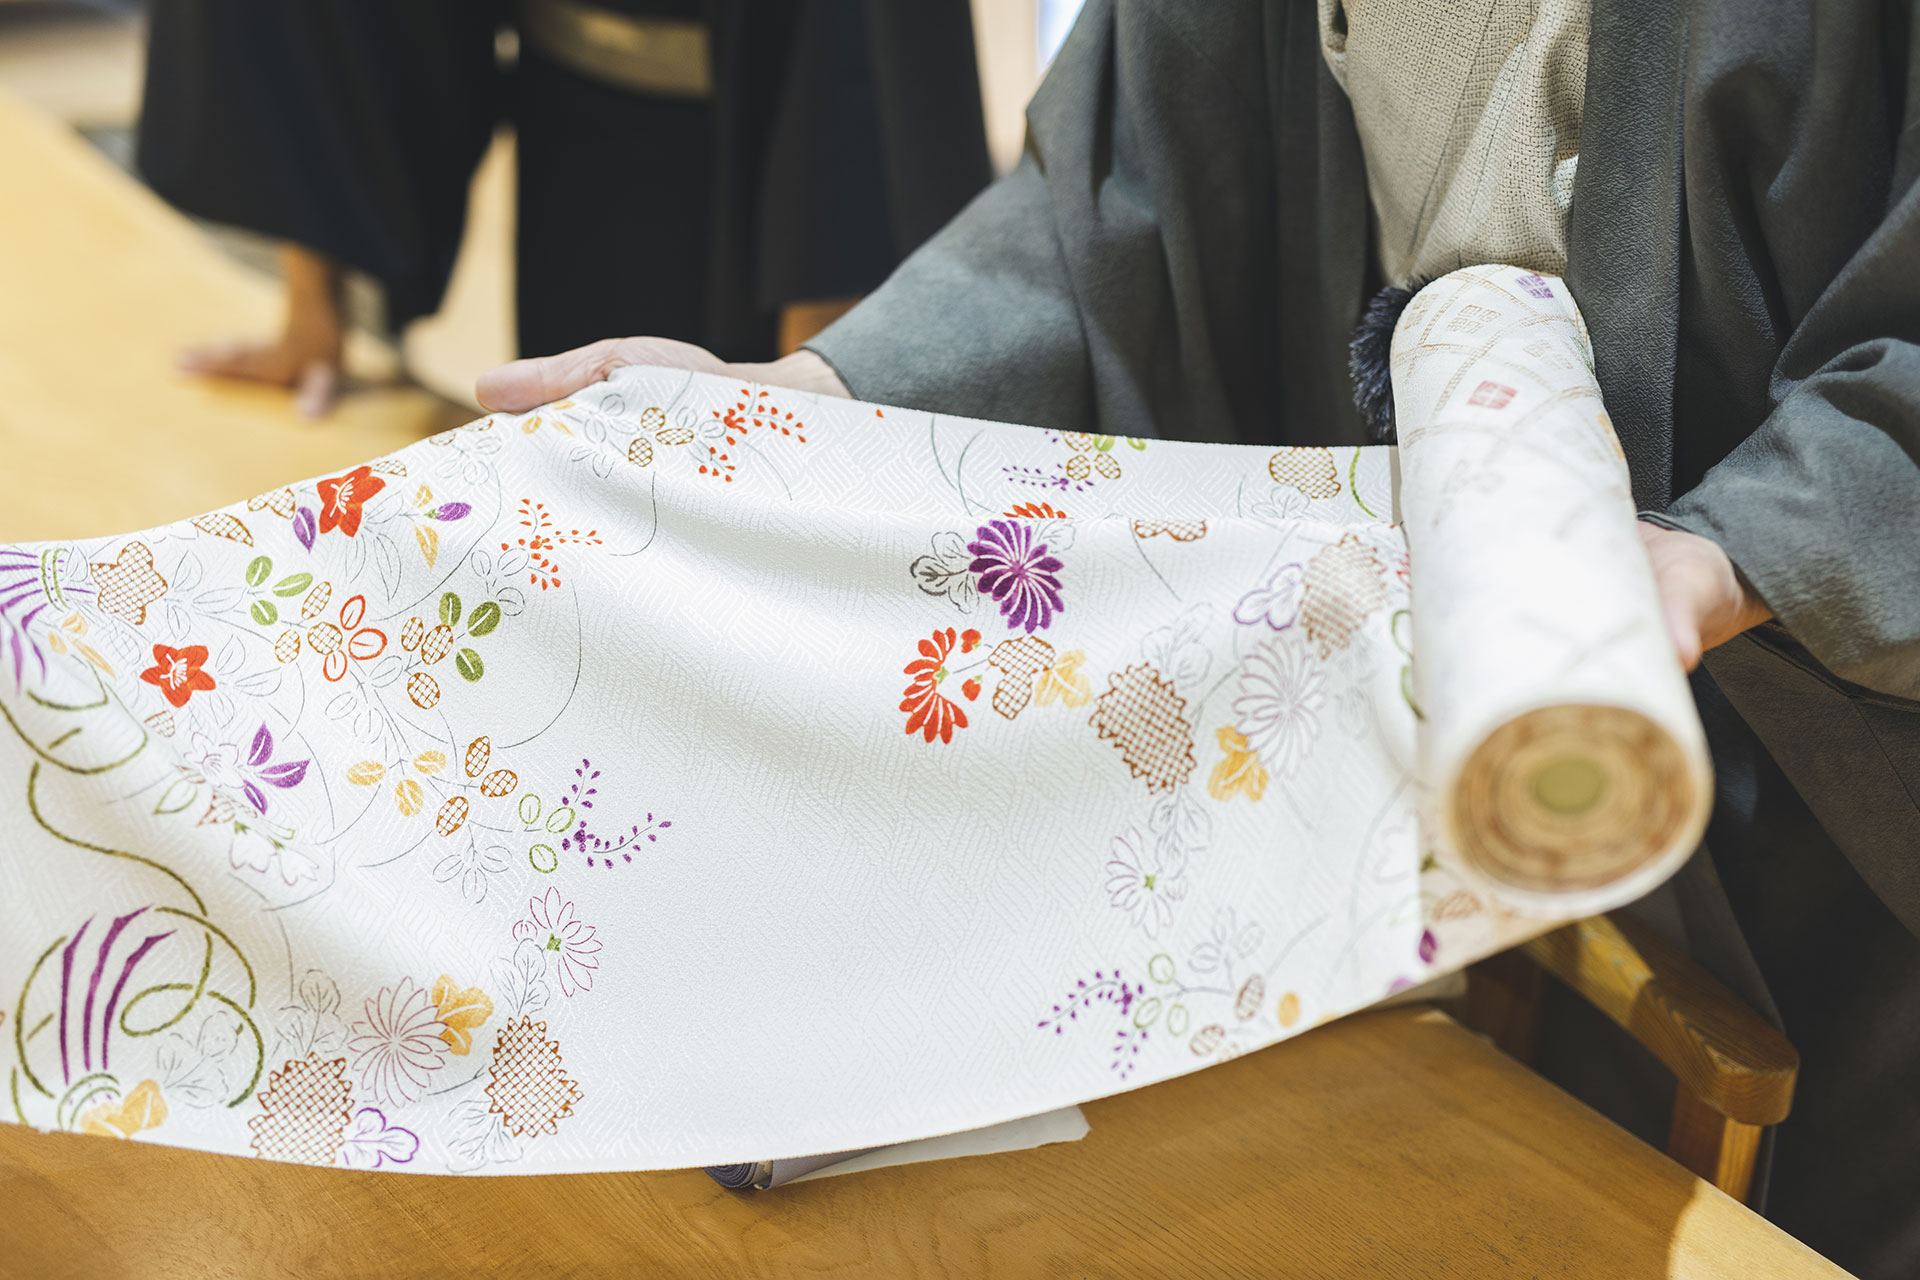 Unrolling kimono fabric reveals its elegant design